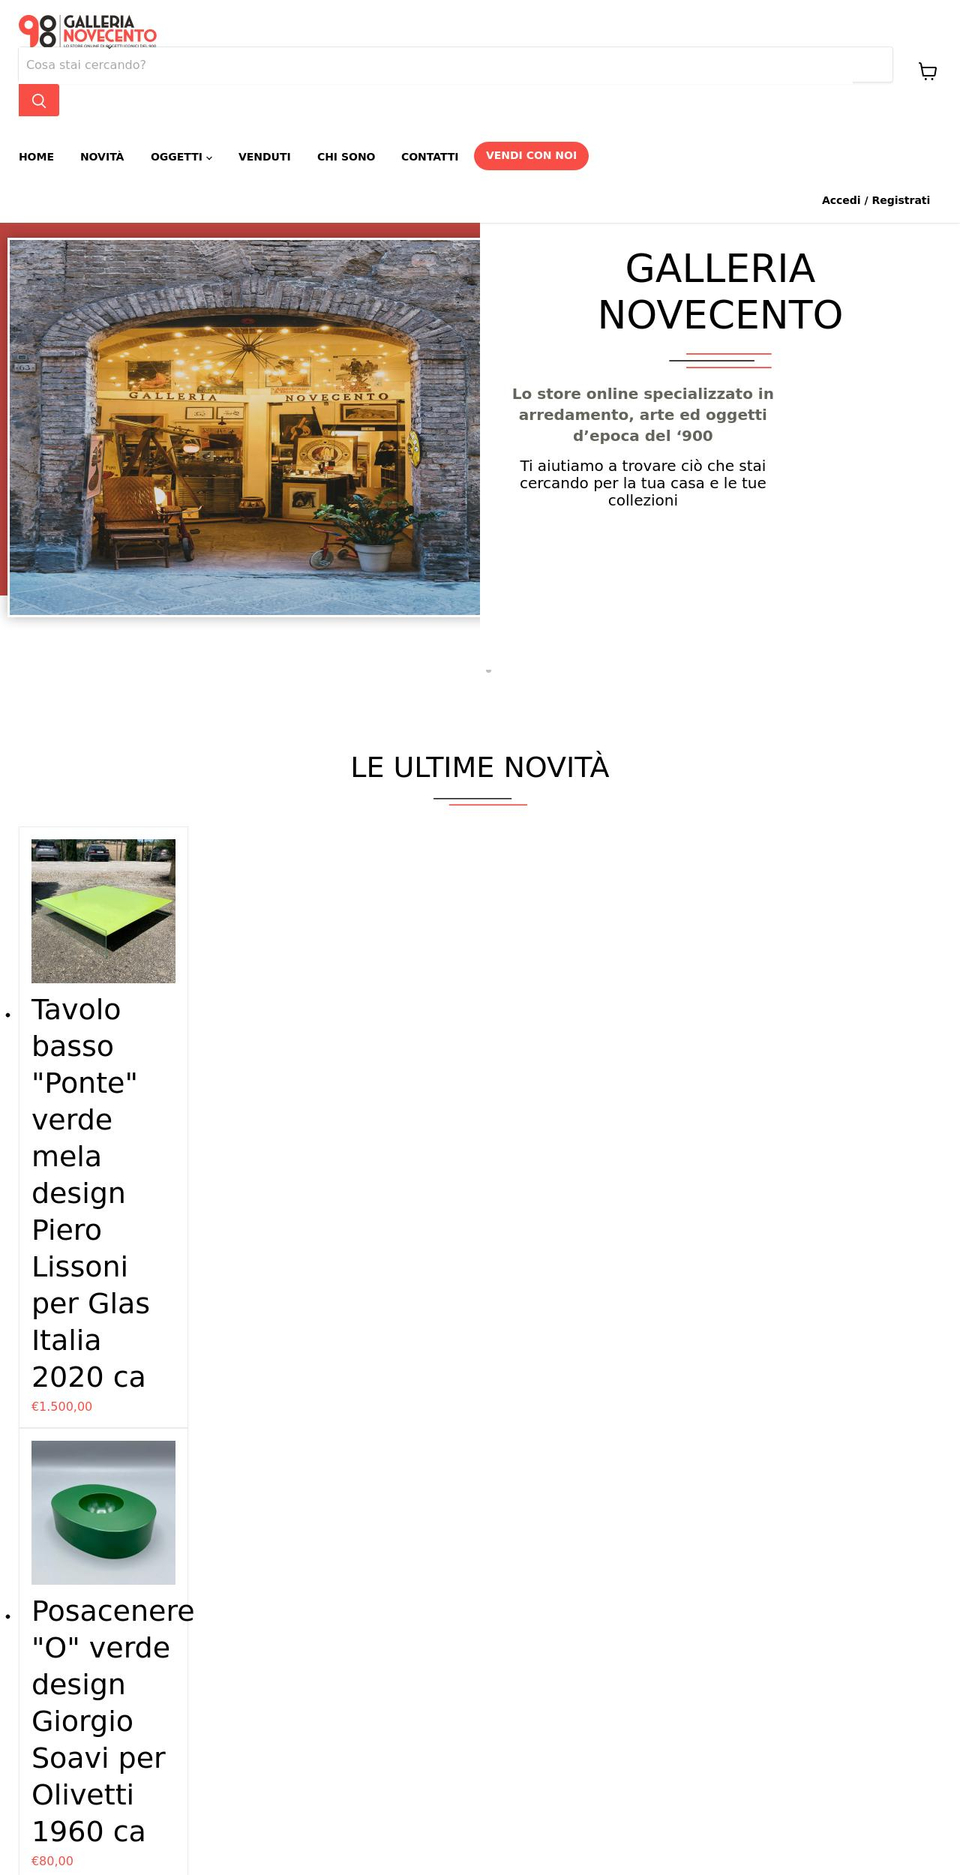 gallerianovecento.it shopify website screenshot